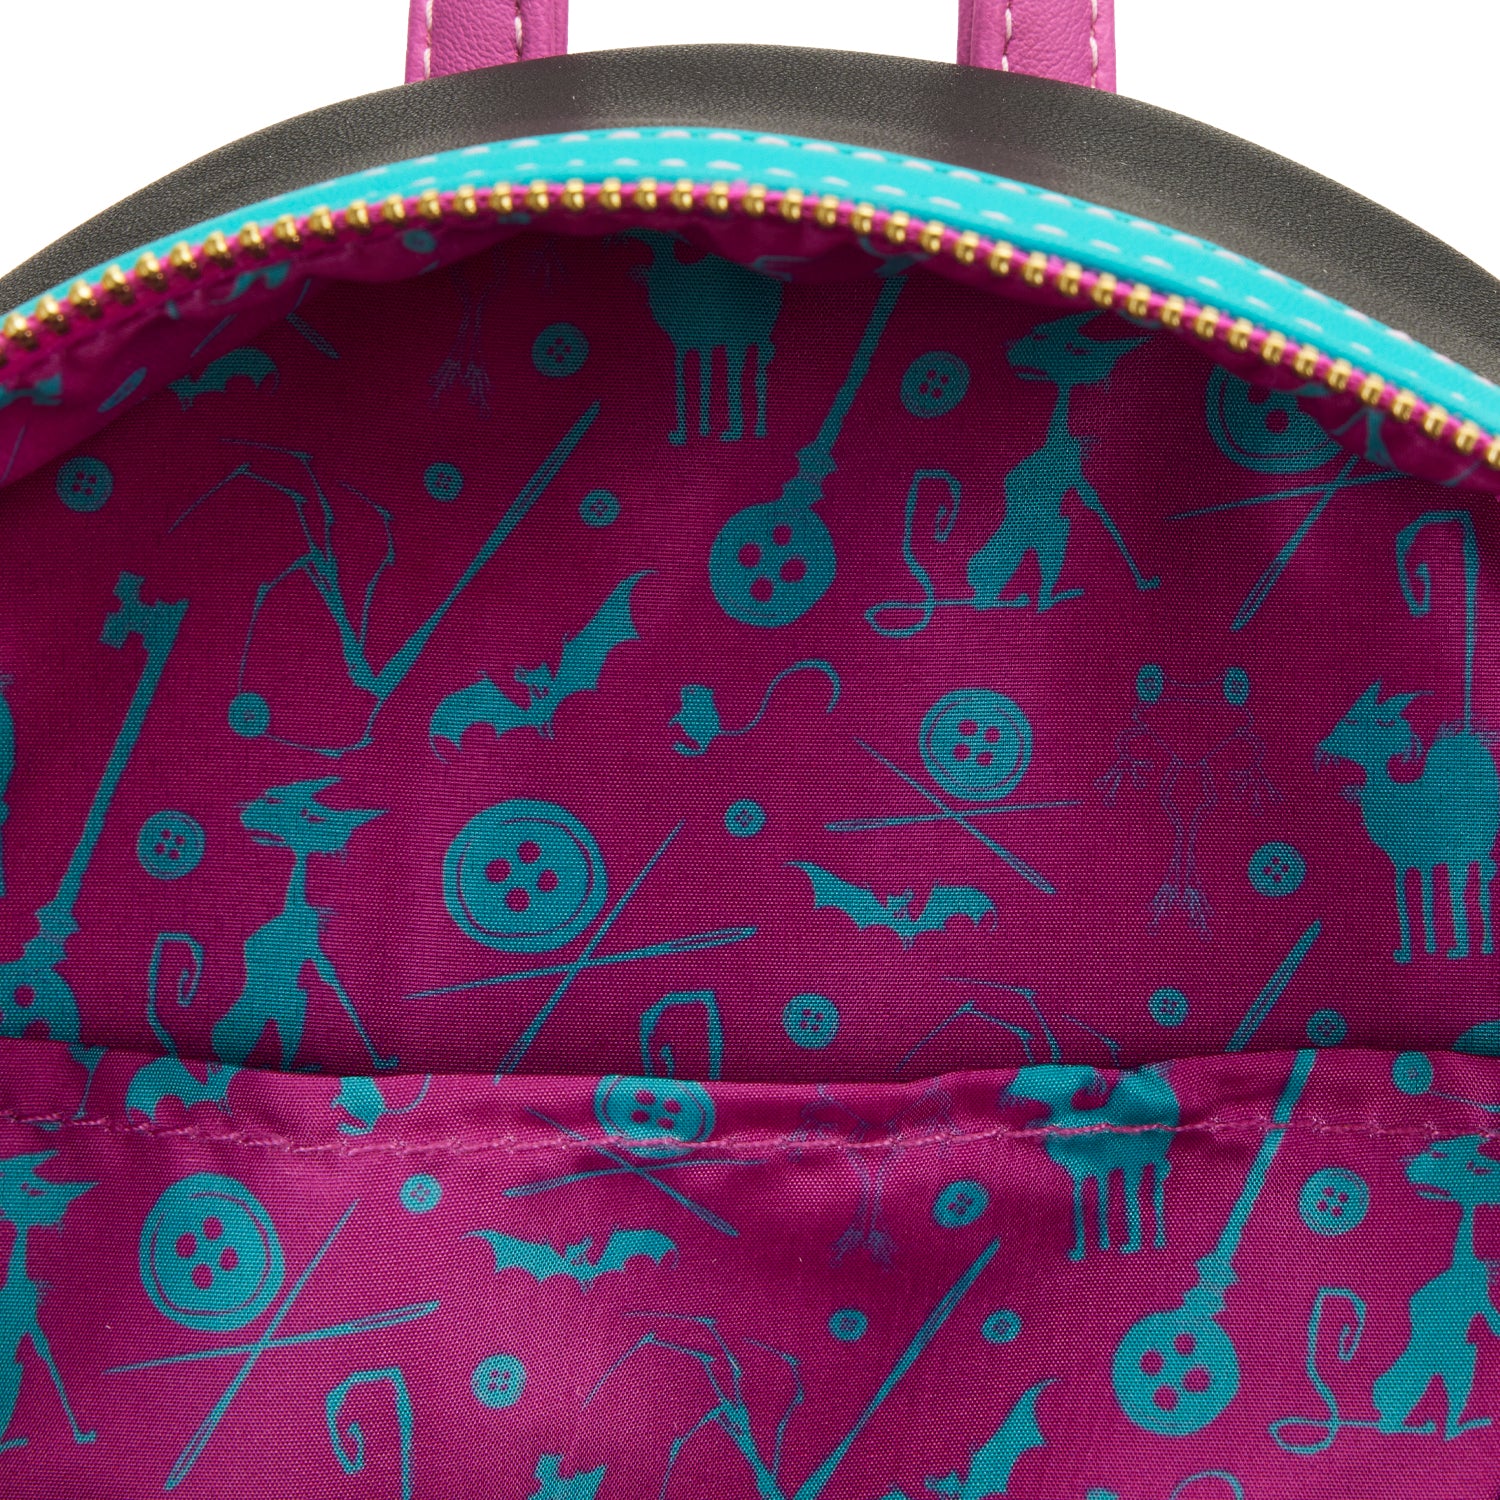 Laika | Coraline House Mini Backpack